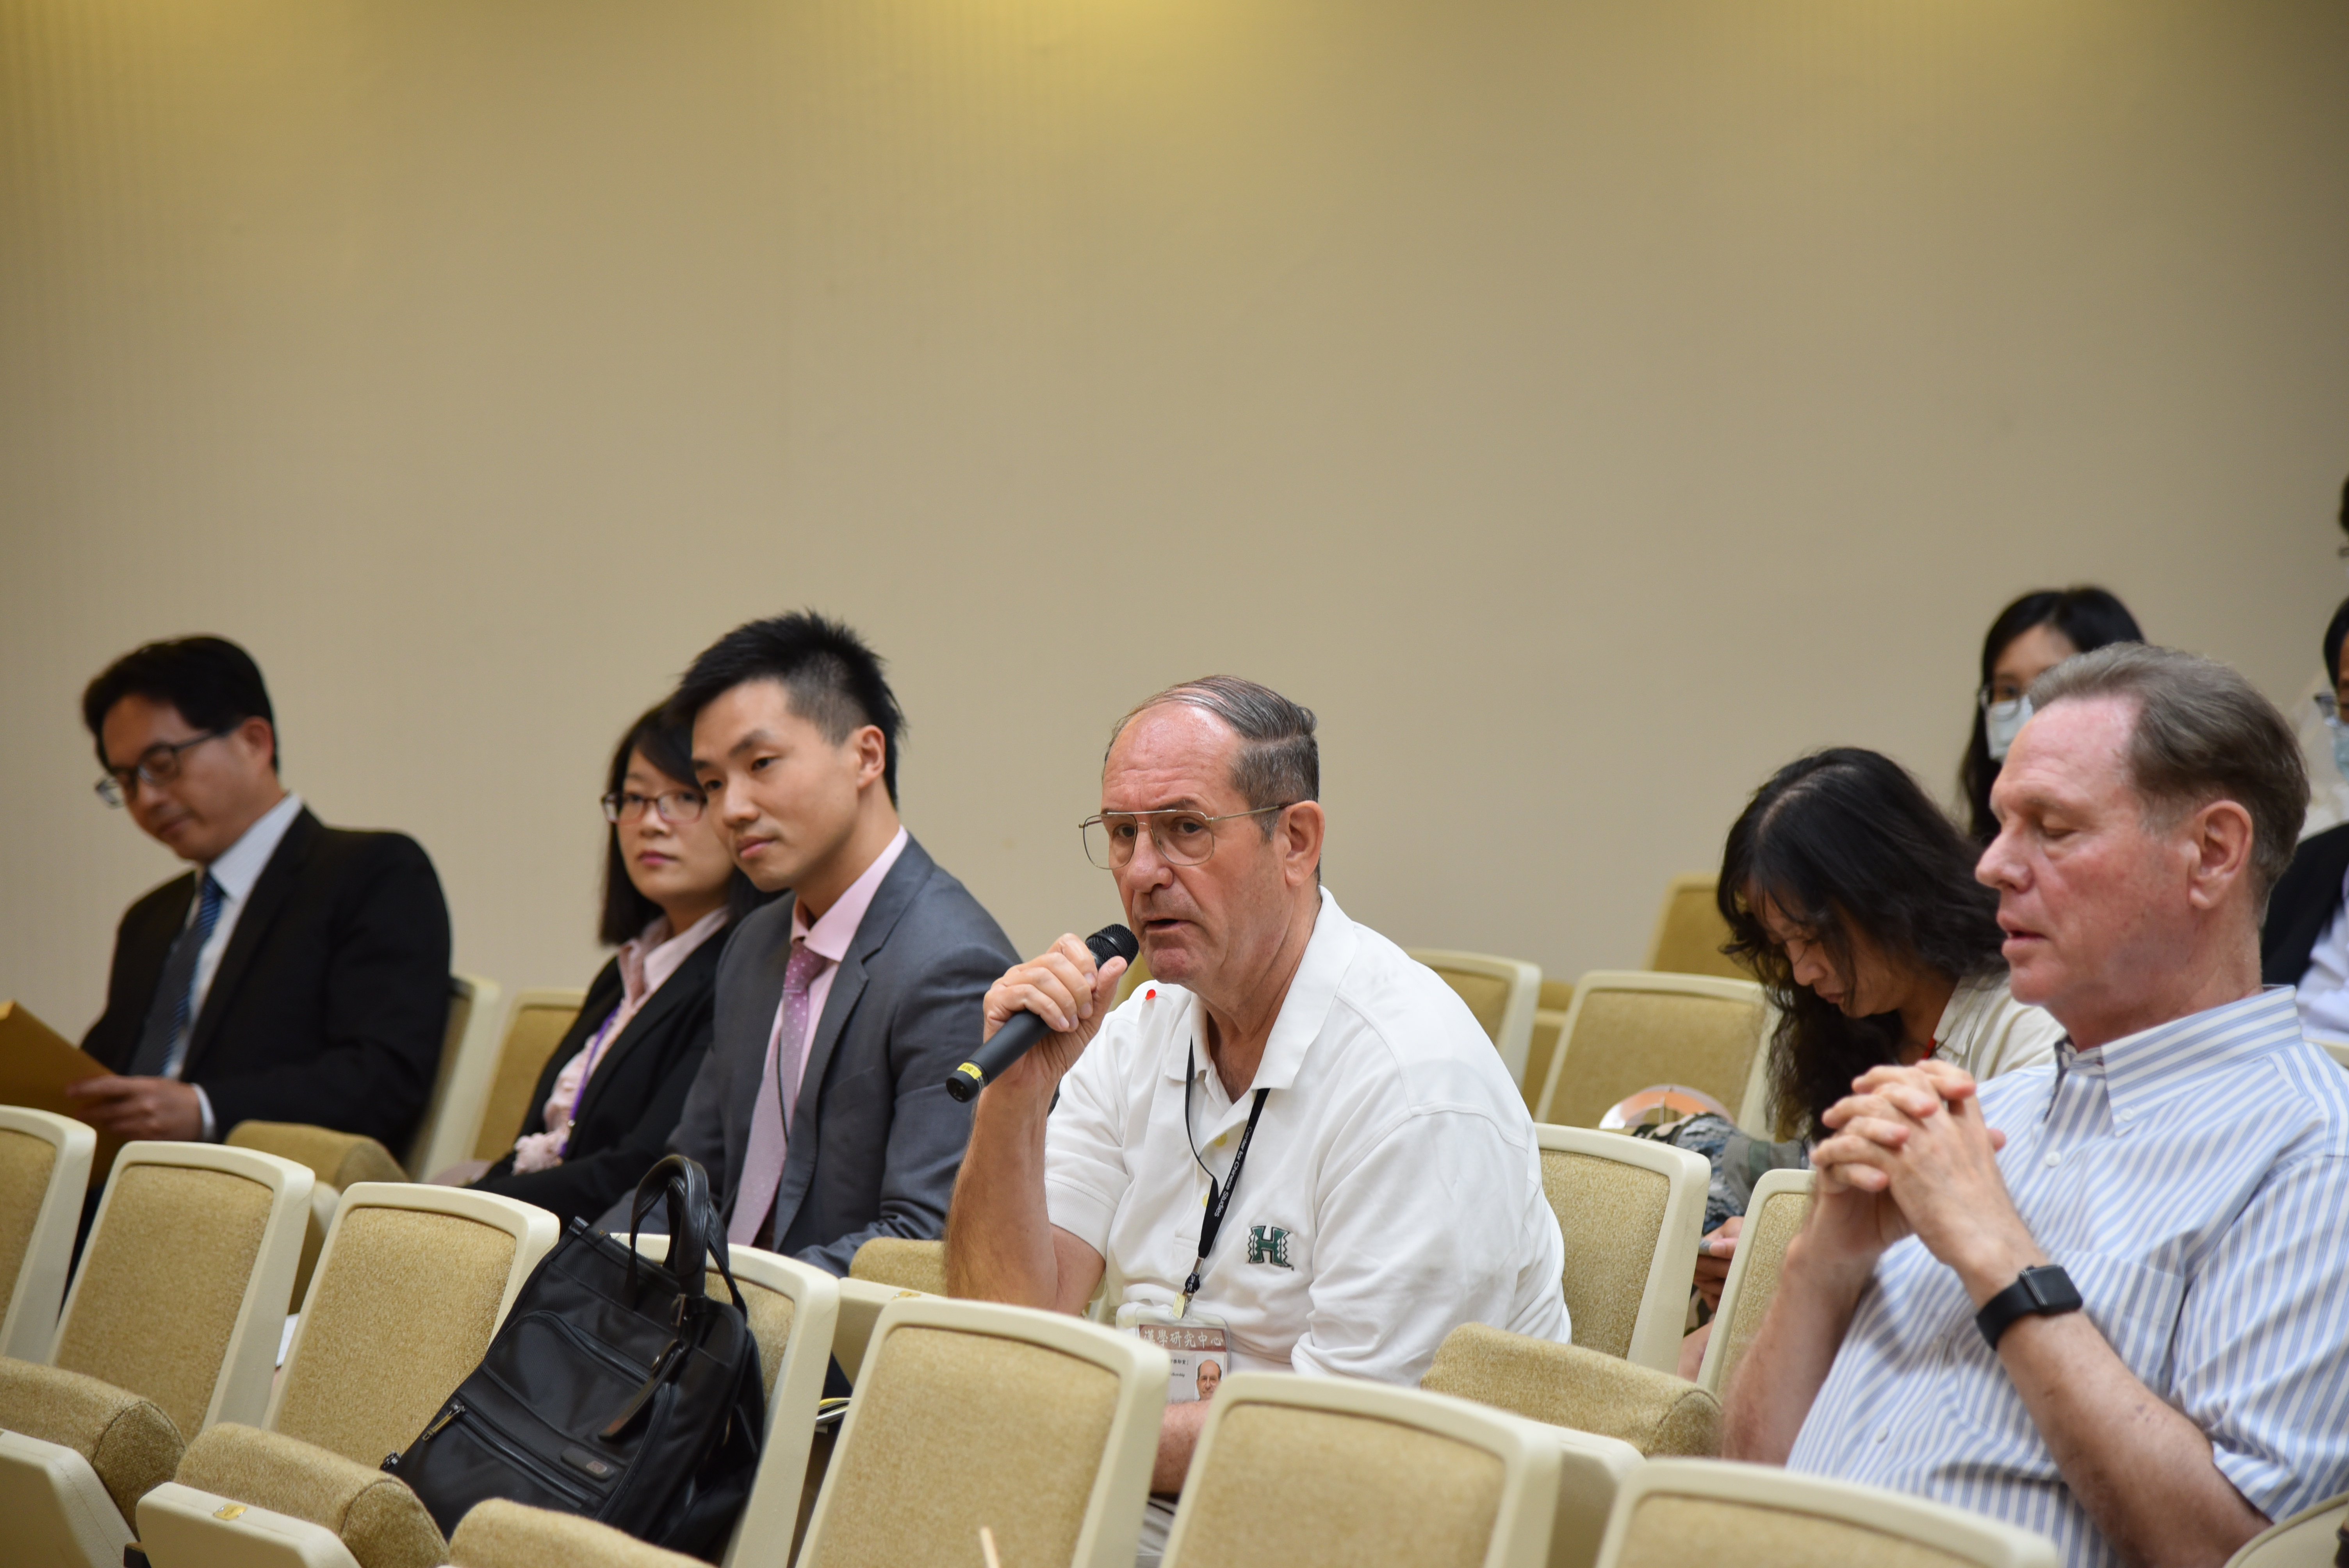 2020 Presentations of MOFA Taiwan Fellowship Scholars—Geopolitics after COVID-19